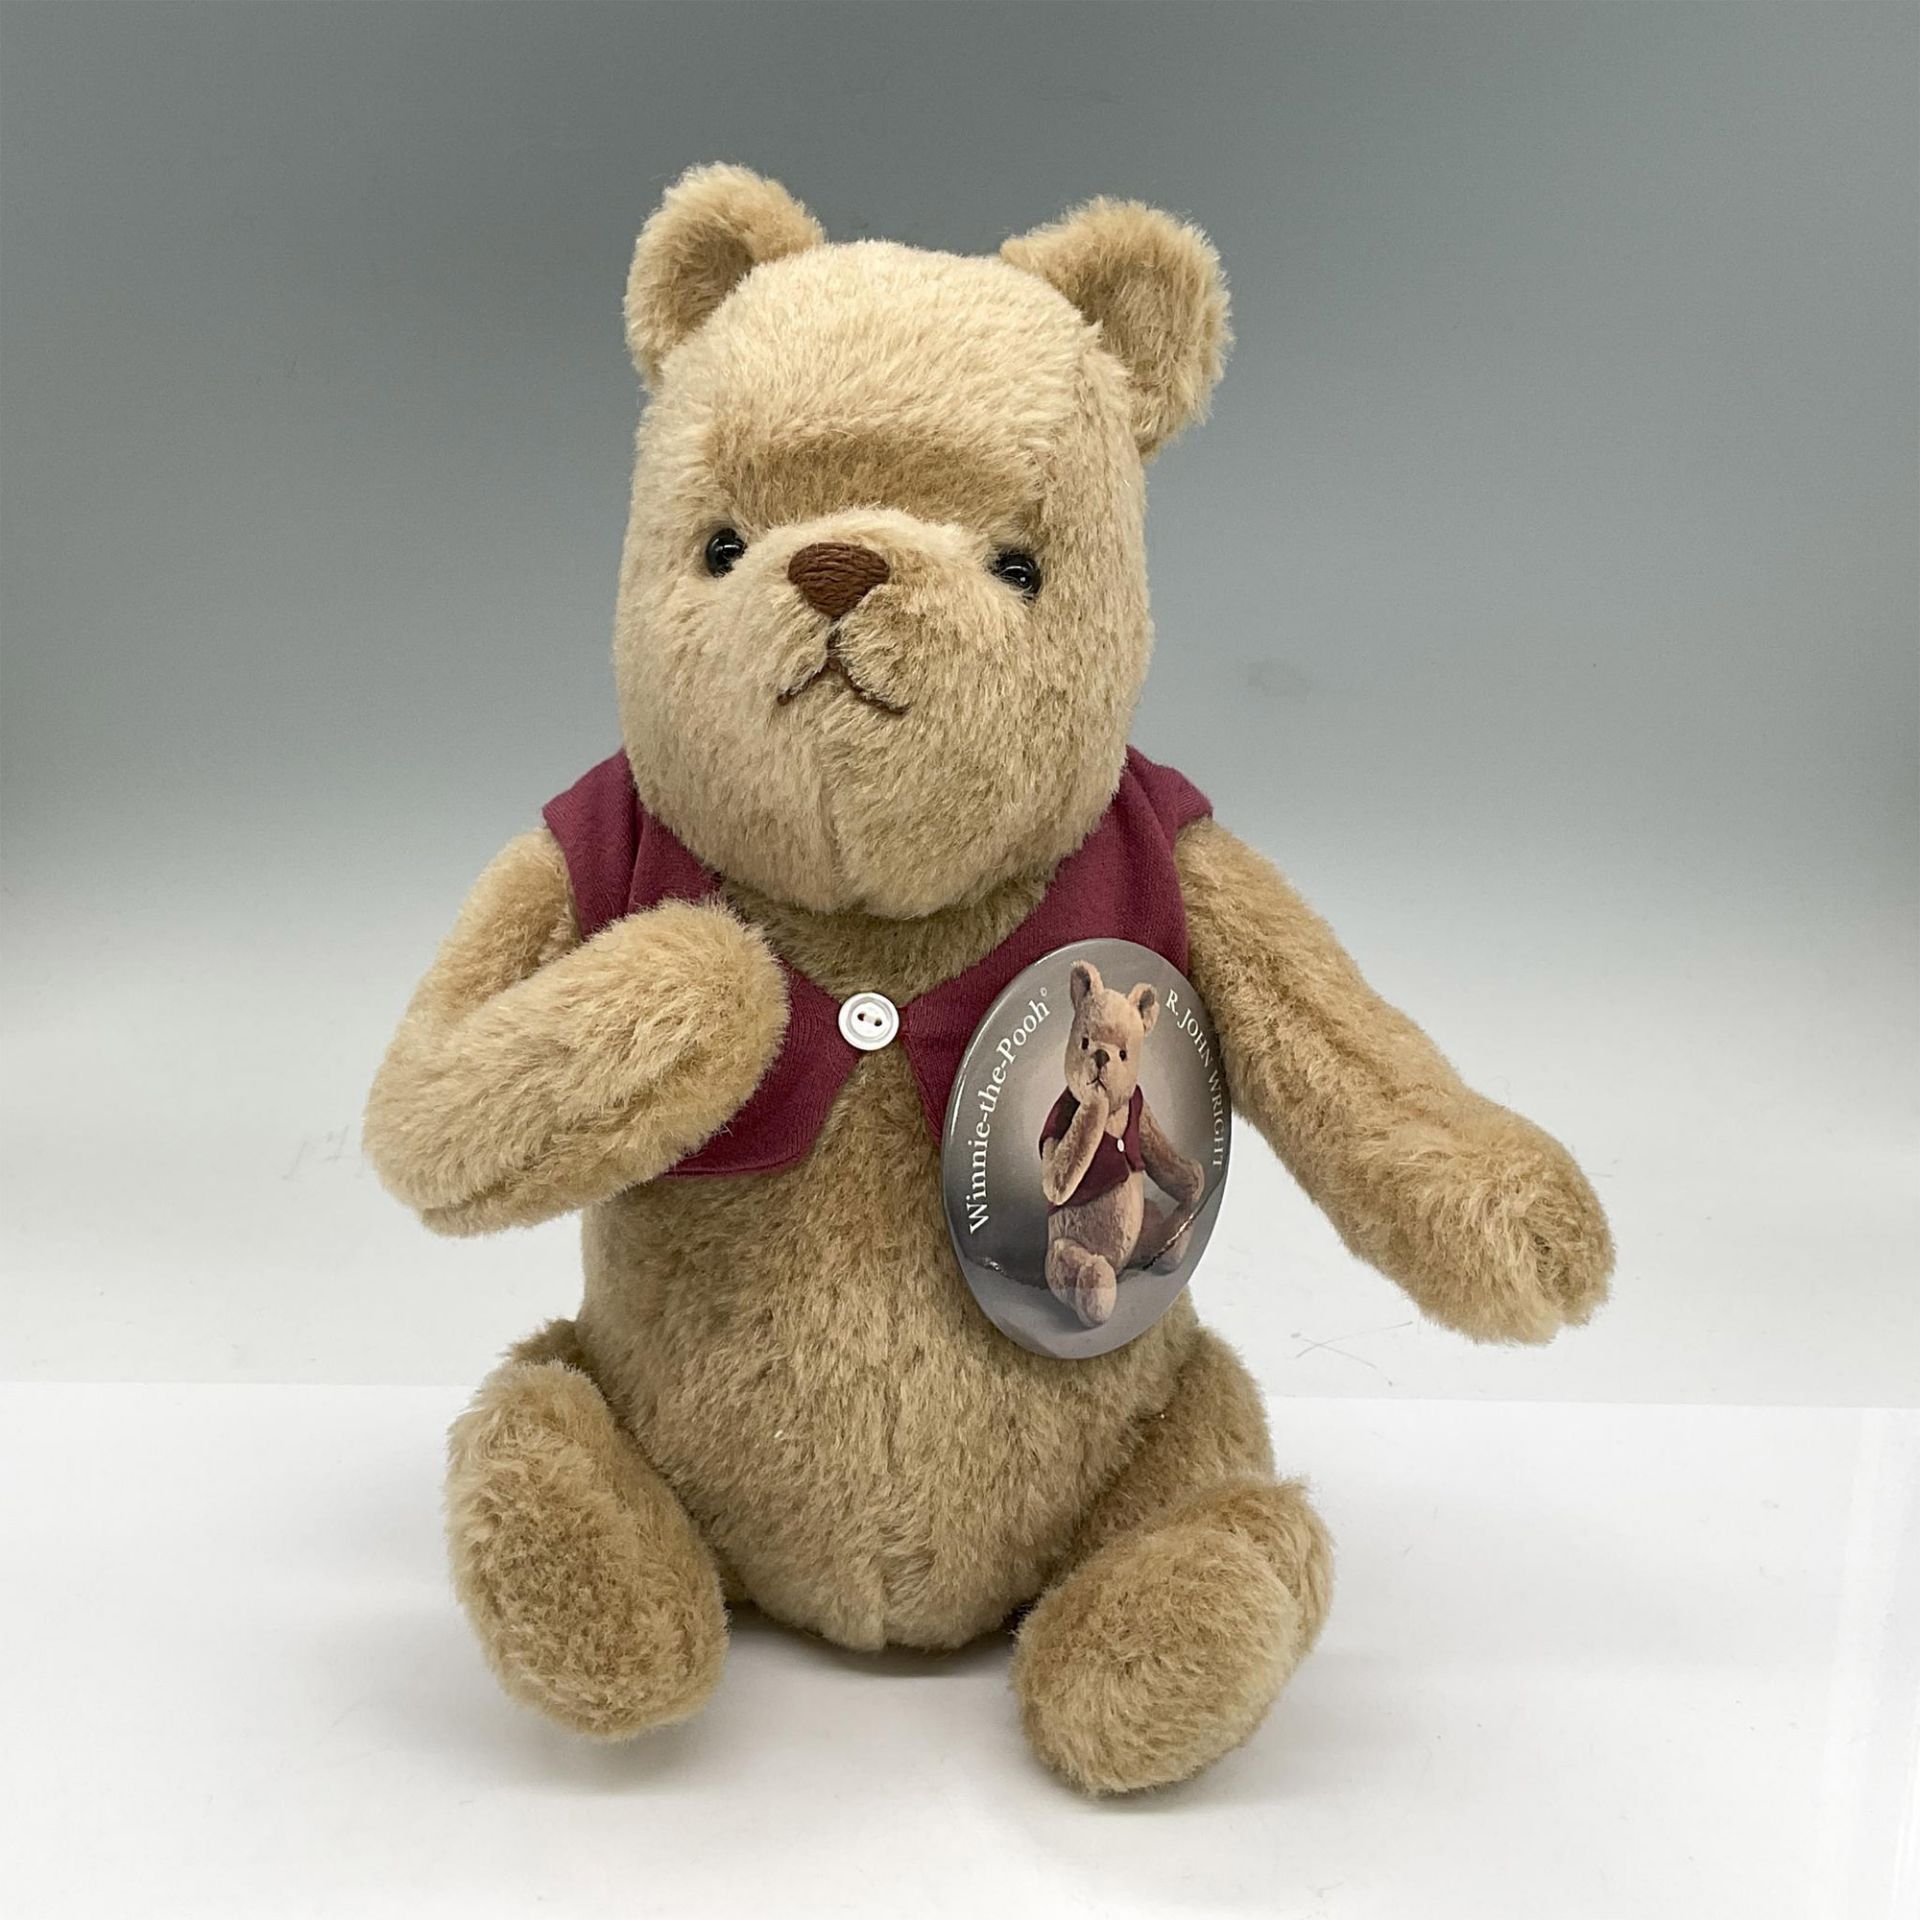 R. John Wright Stuffed Animal, Classic Winnie The Pooh